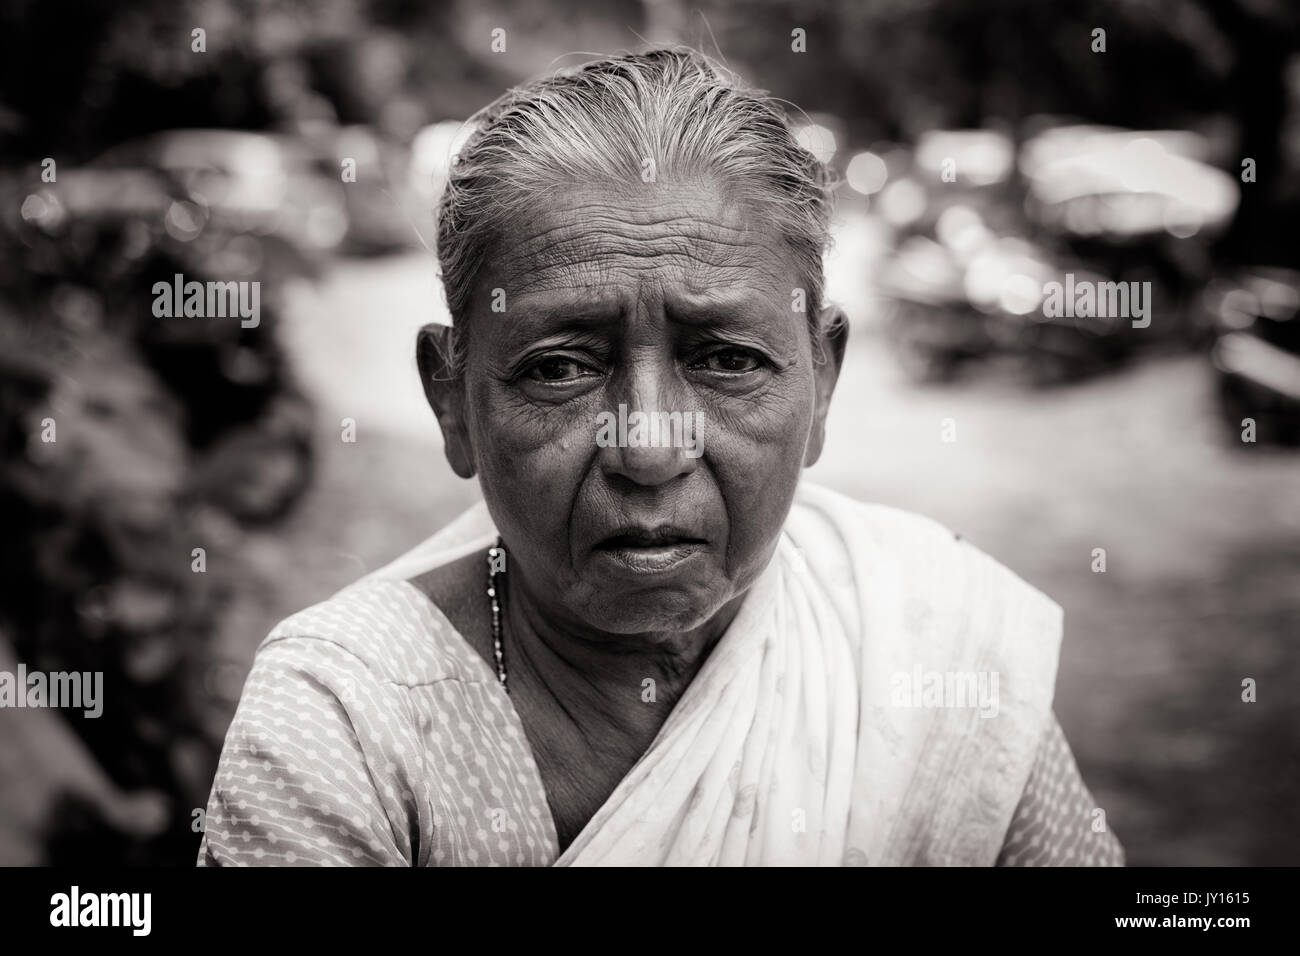 Mumbai, India - 6 August: An old woman sells food at Kanheri Caves in Mumbai, India Stock Photo